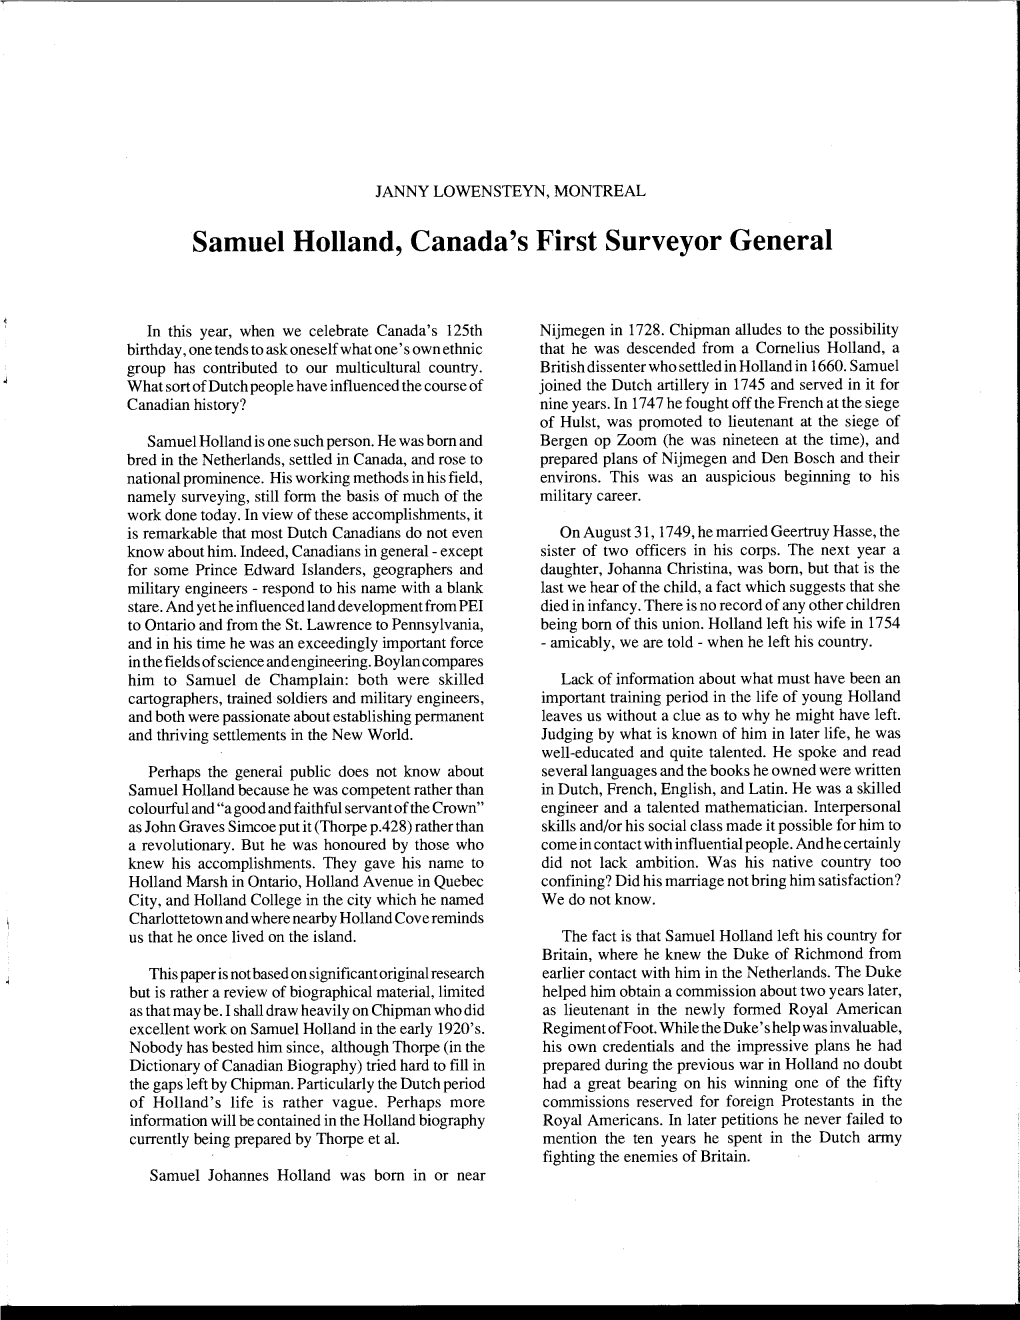 Samuel Holland, Canada's First Surveyor General